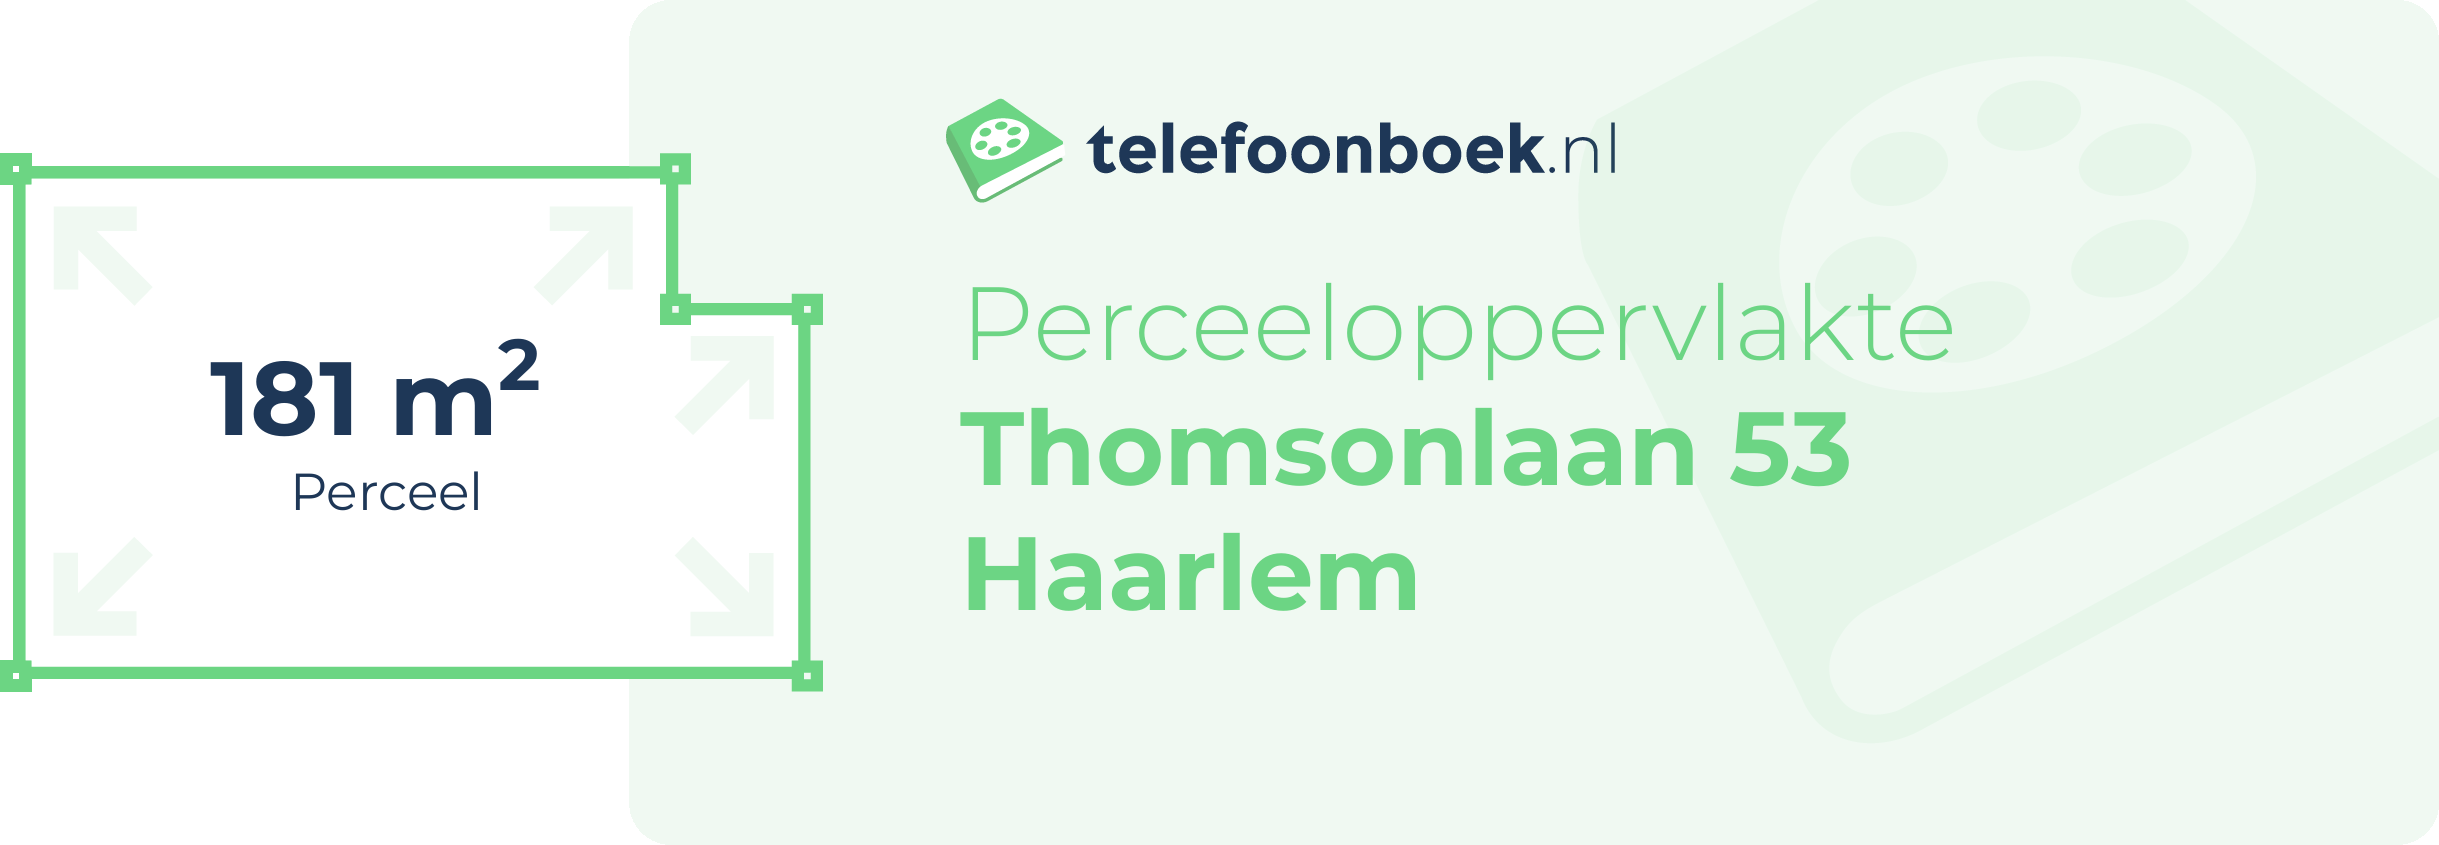 Perceeloppervlakte Thomsonlaan 53 Haarlem